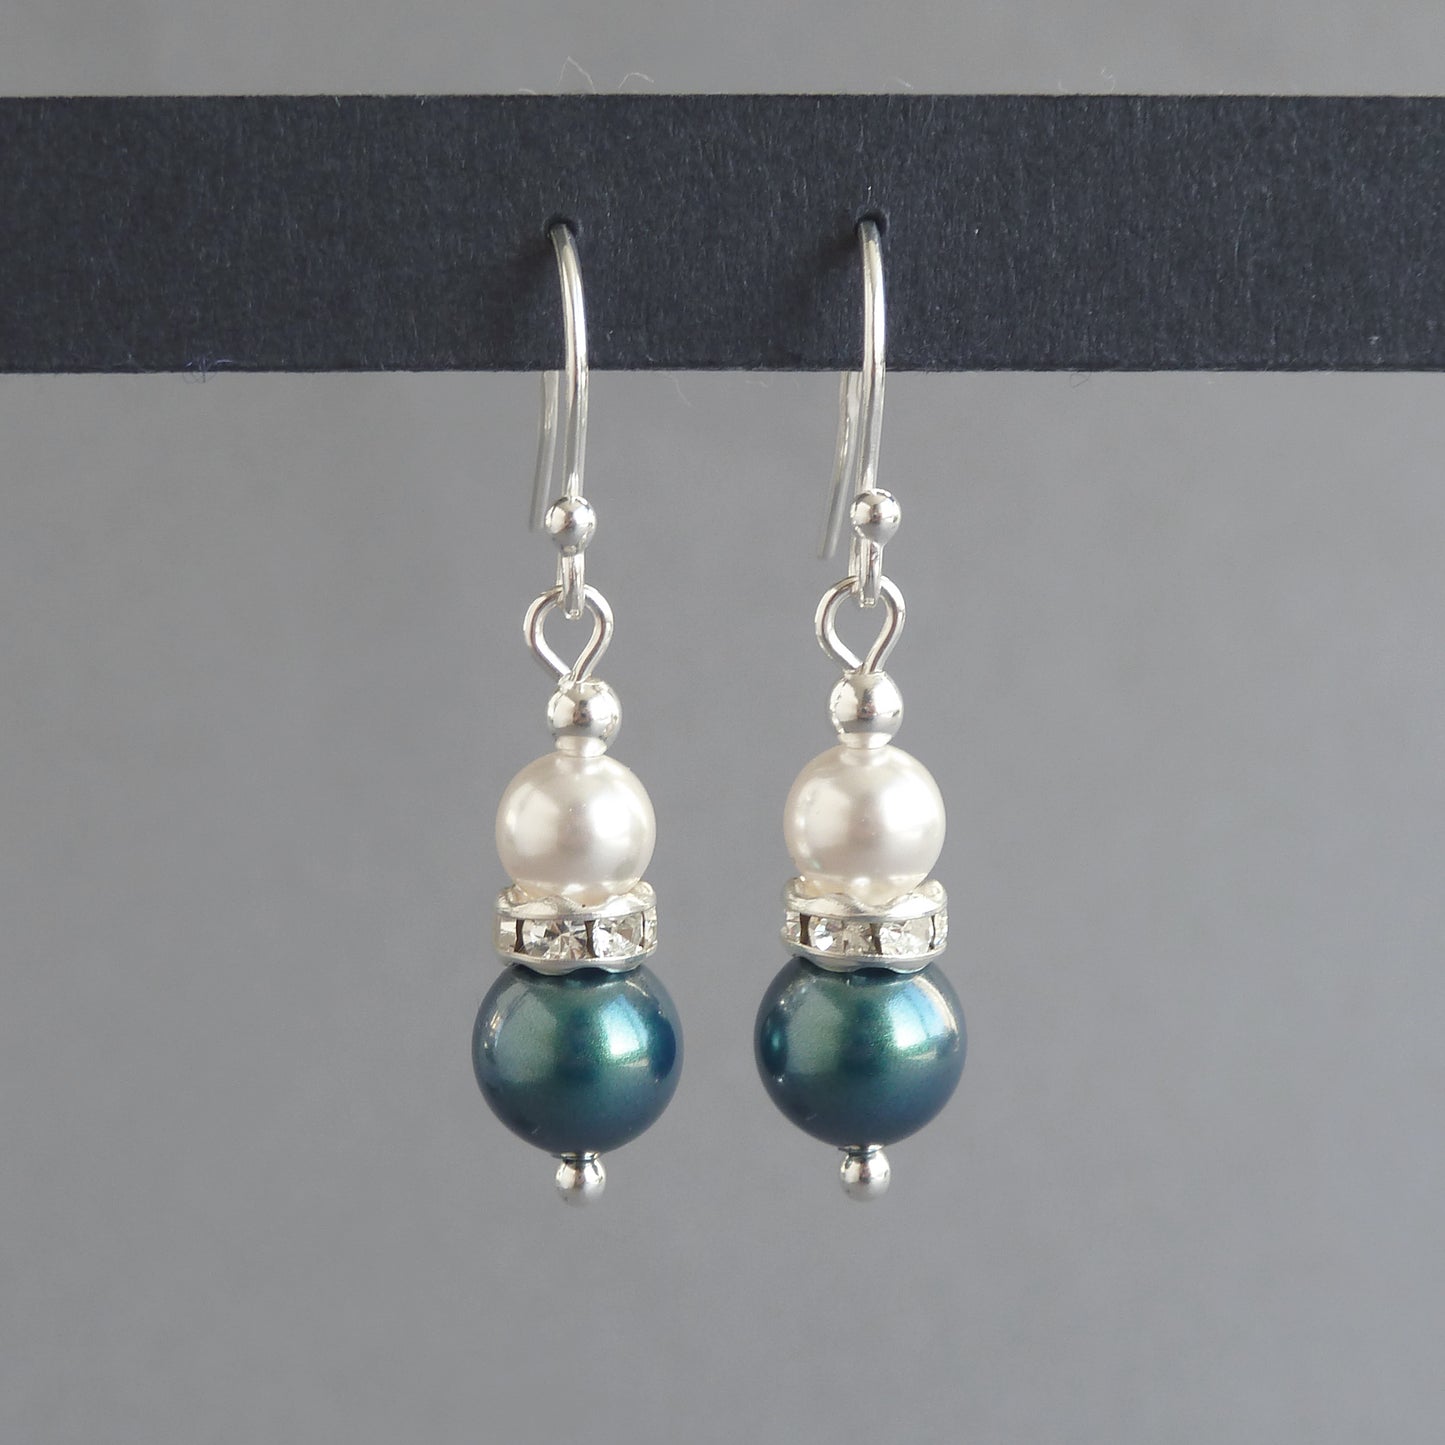 Teal pearl drop earrings with silver hooks